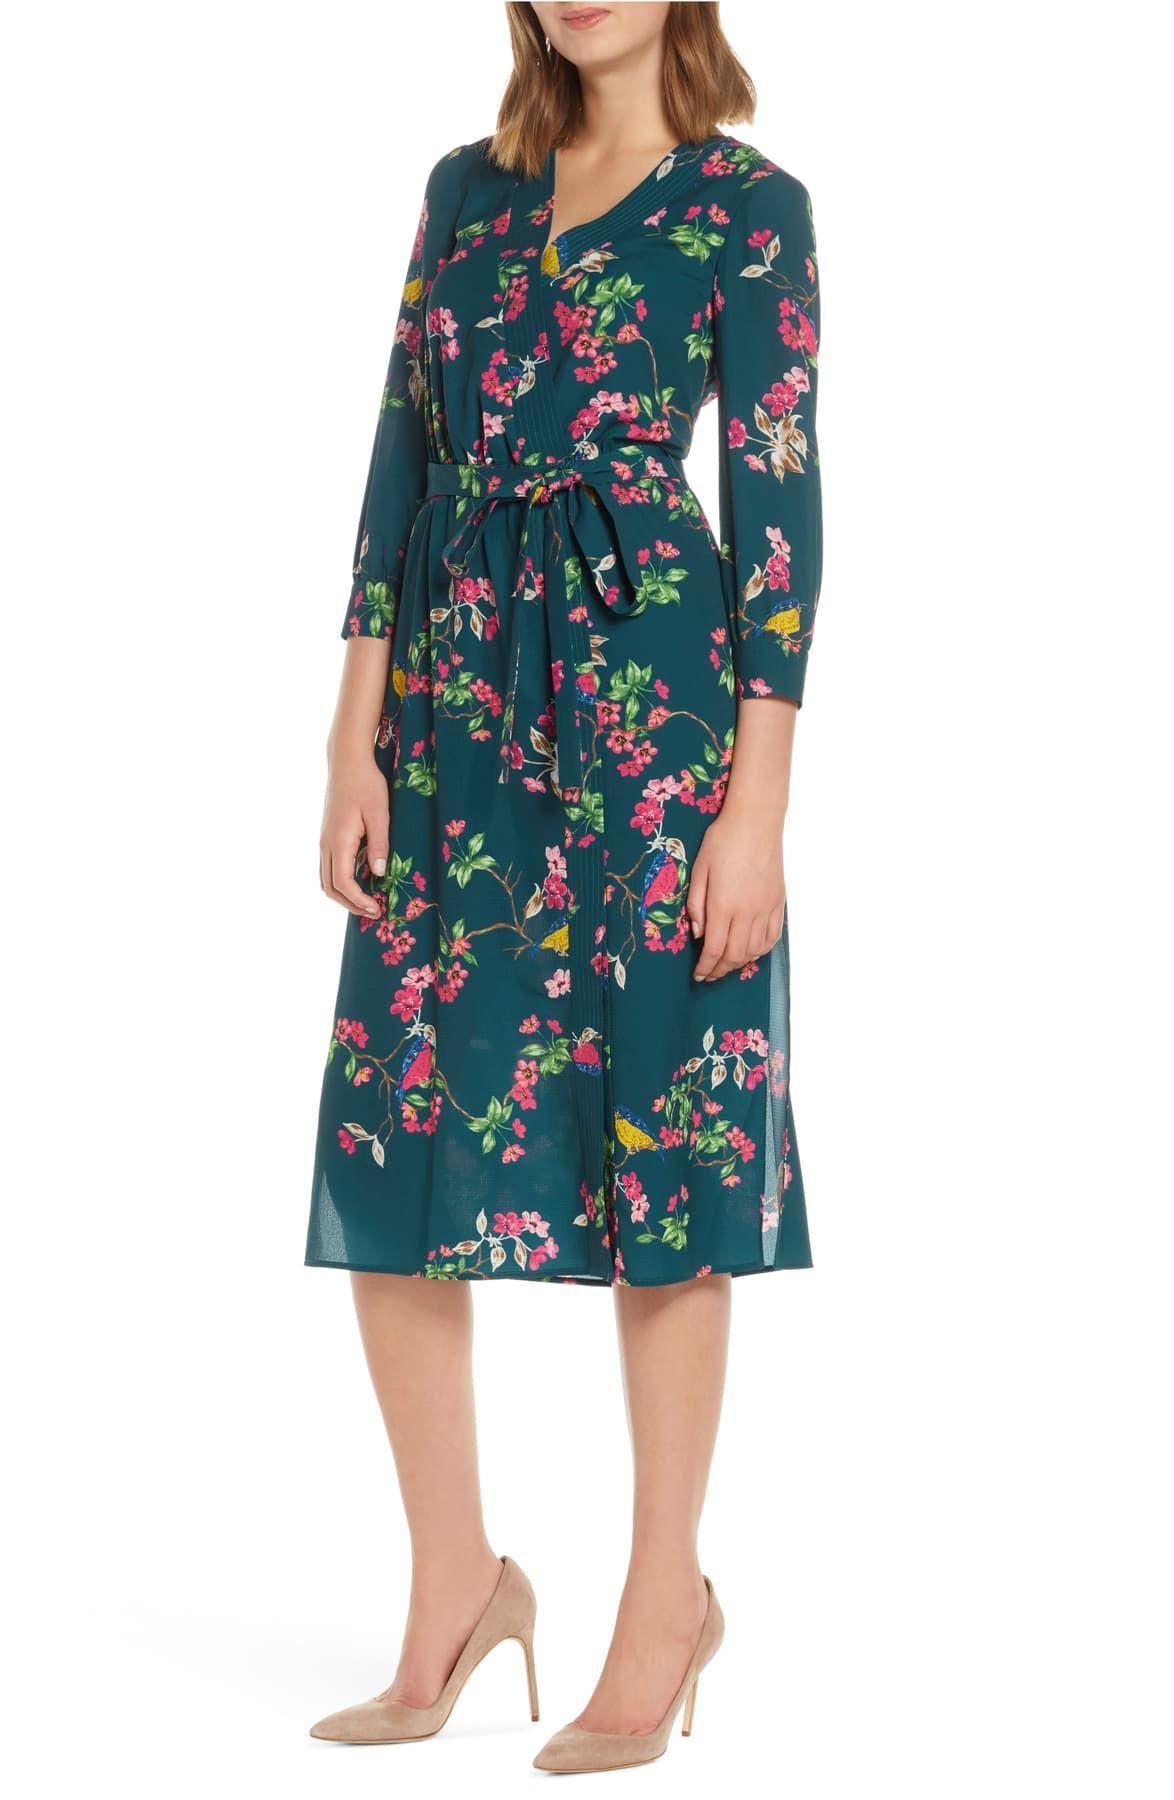 Eliza J Floral Faux Wrap Dress in Green - Save 19% - Lyst